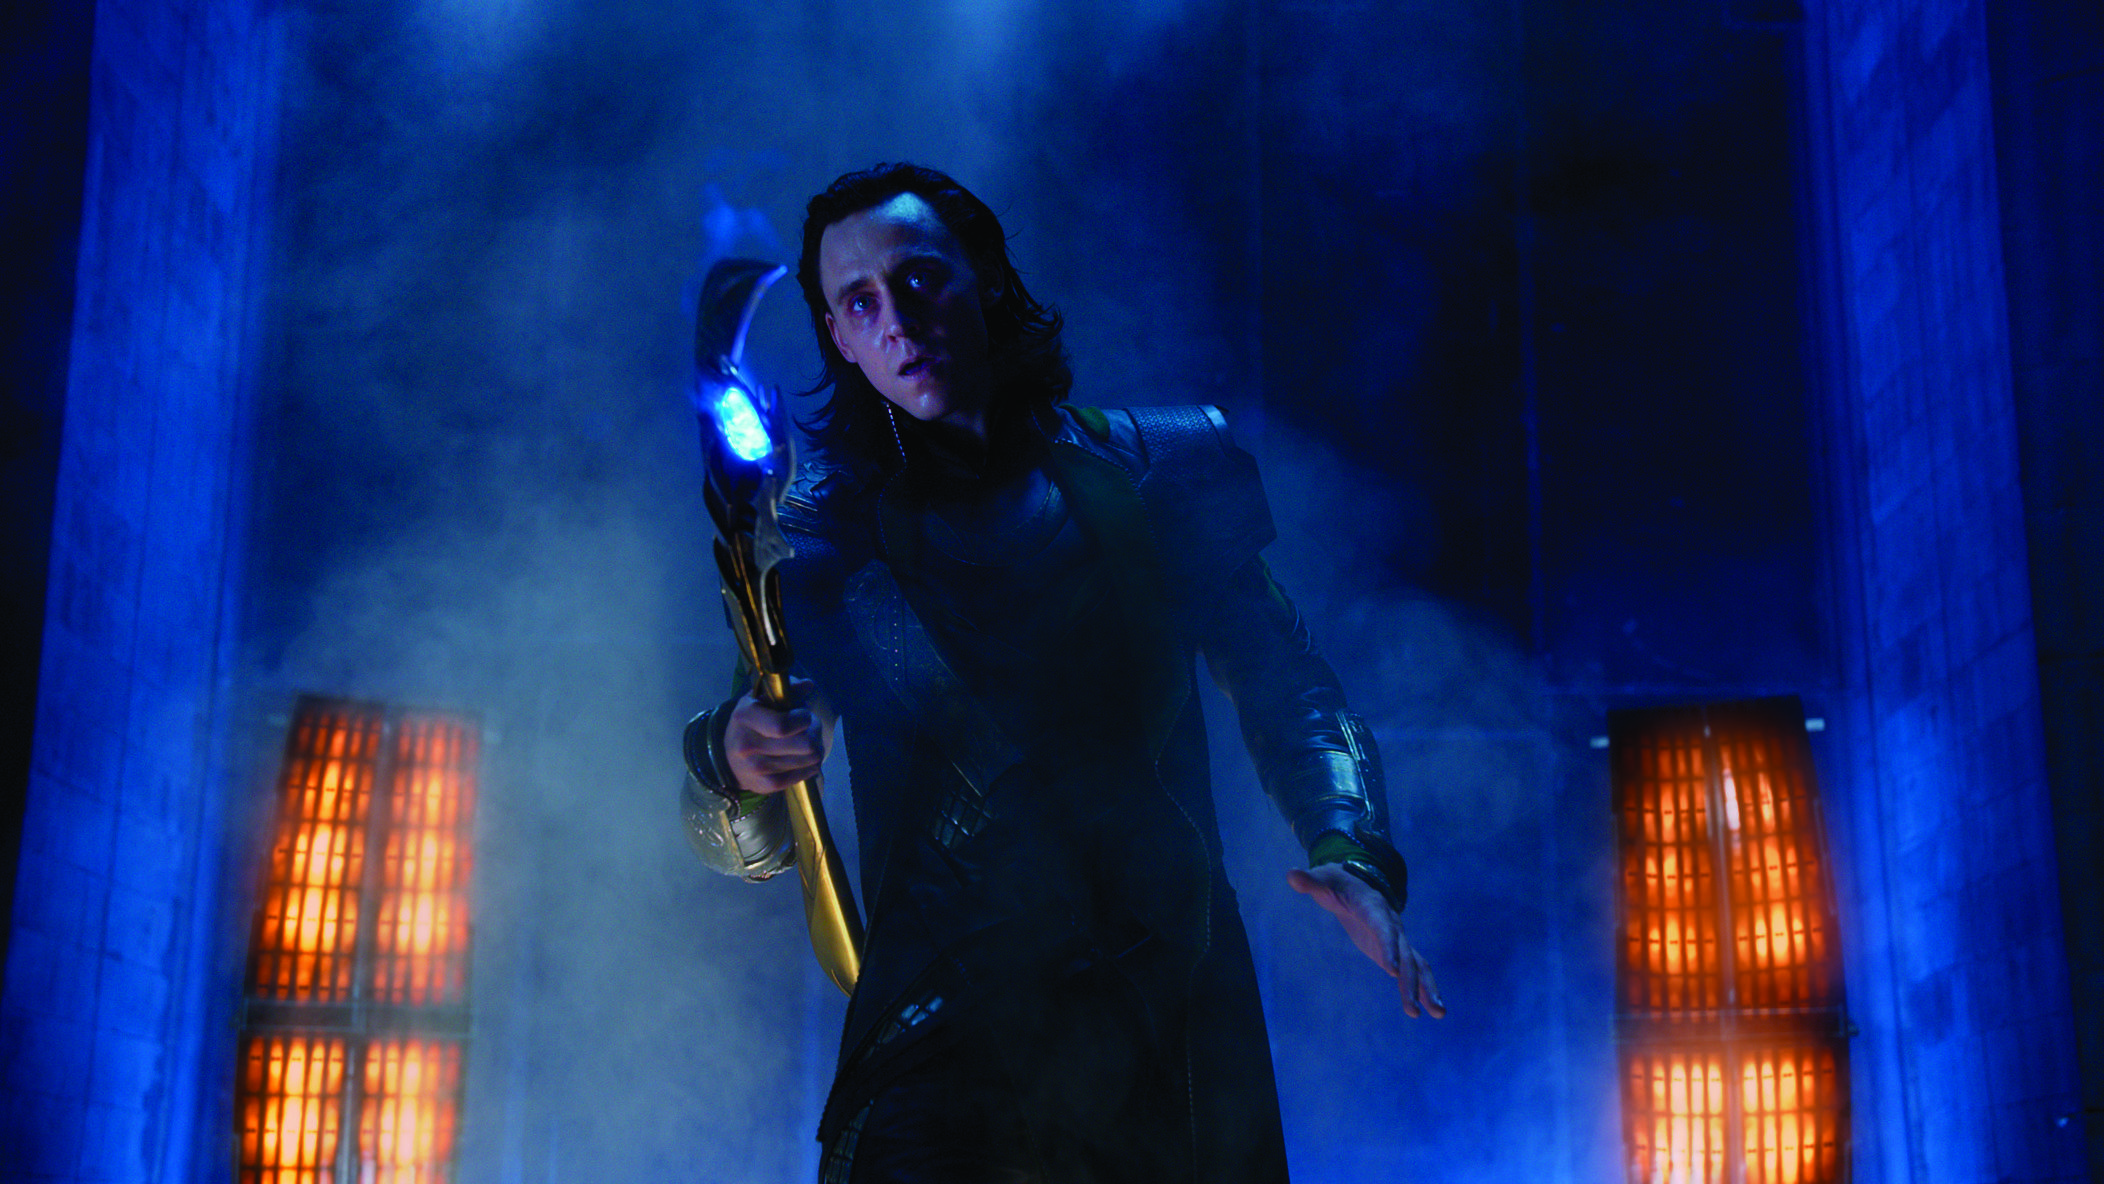 The Avengers - Loki